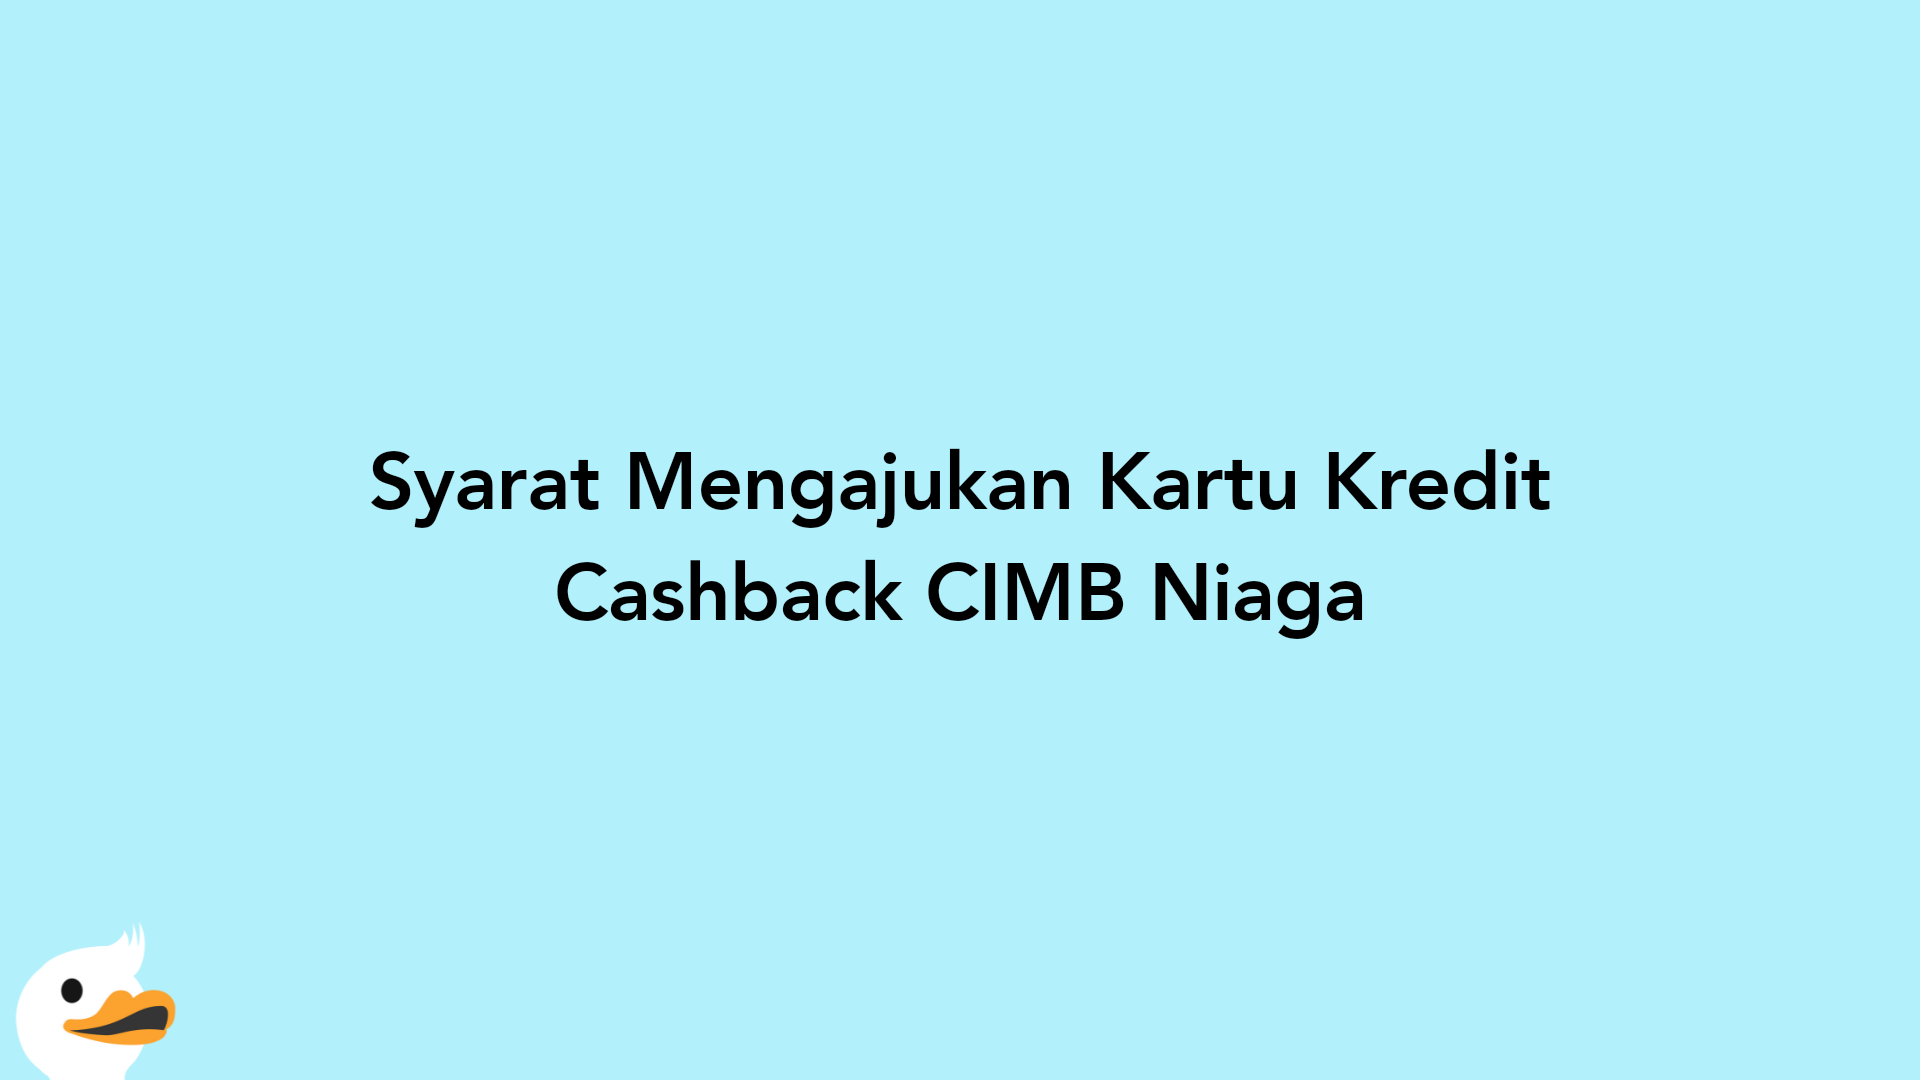 Syarat Mengajukan Kartu Kredit Cashback CIMB Niaga